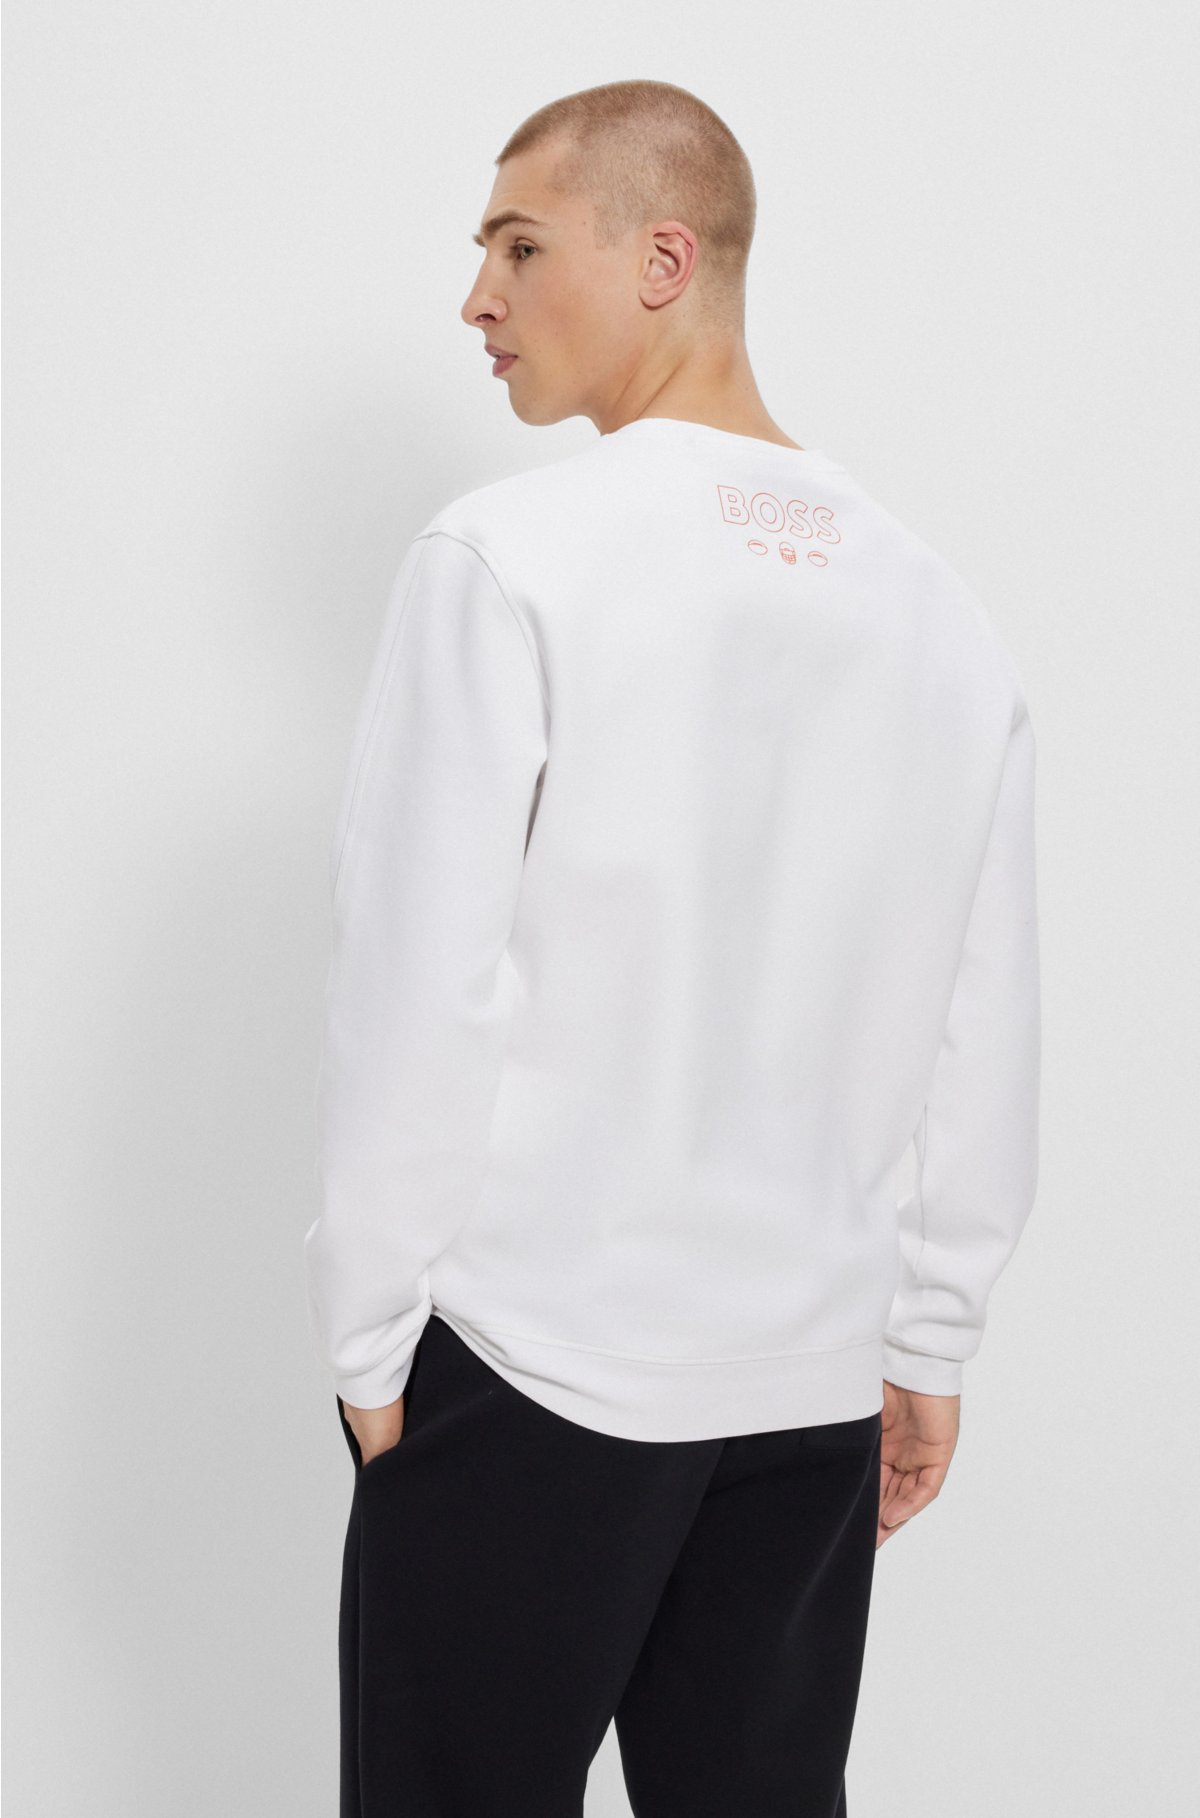 BOSS x NFL cotton-blend sweatshirt with collaborative branding, Broncos